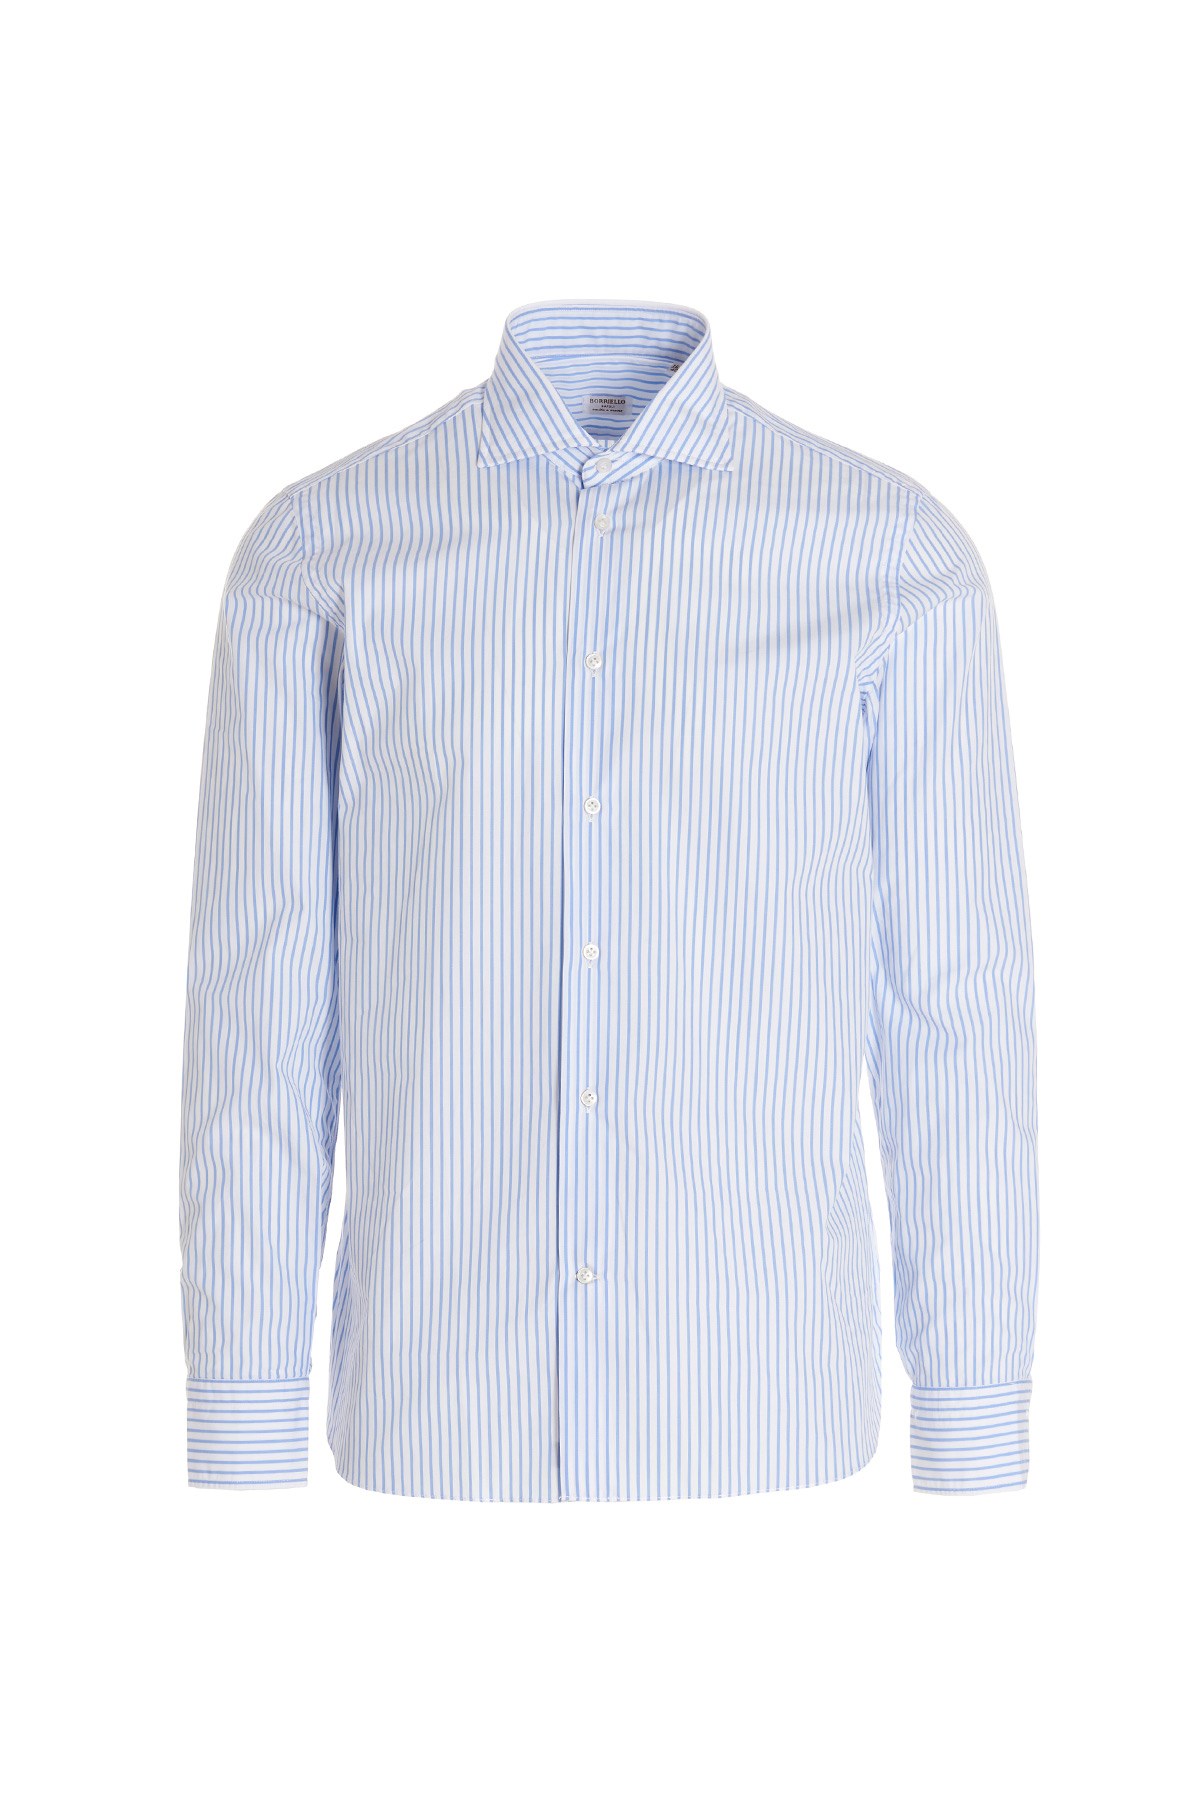 BORRIELLO Striped Cotton Shirt